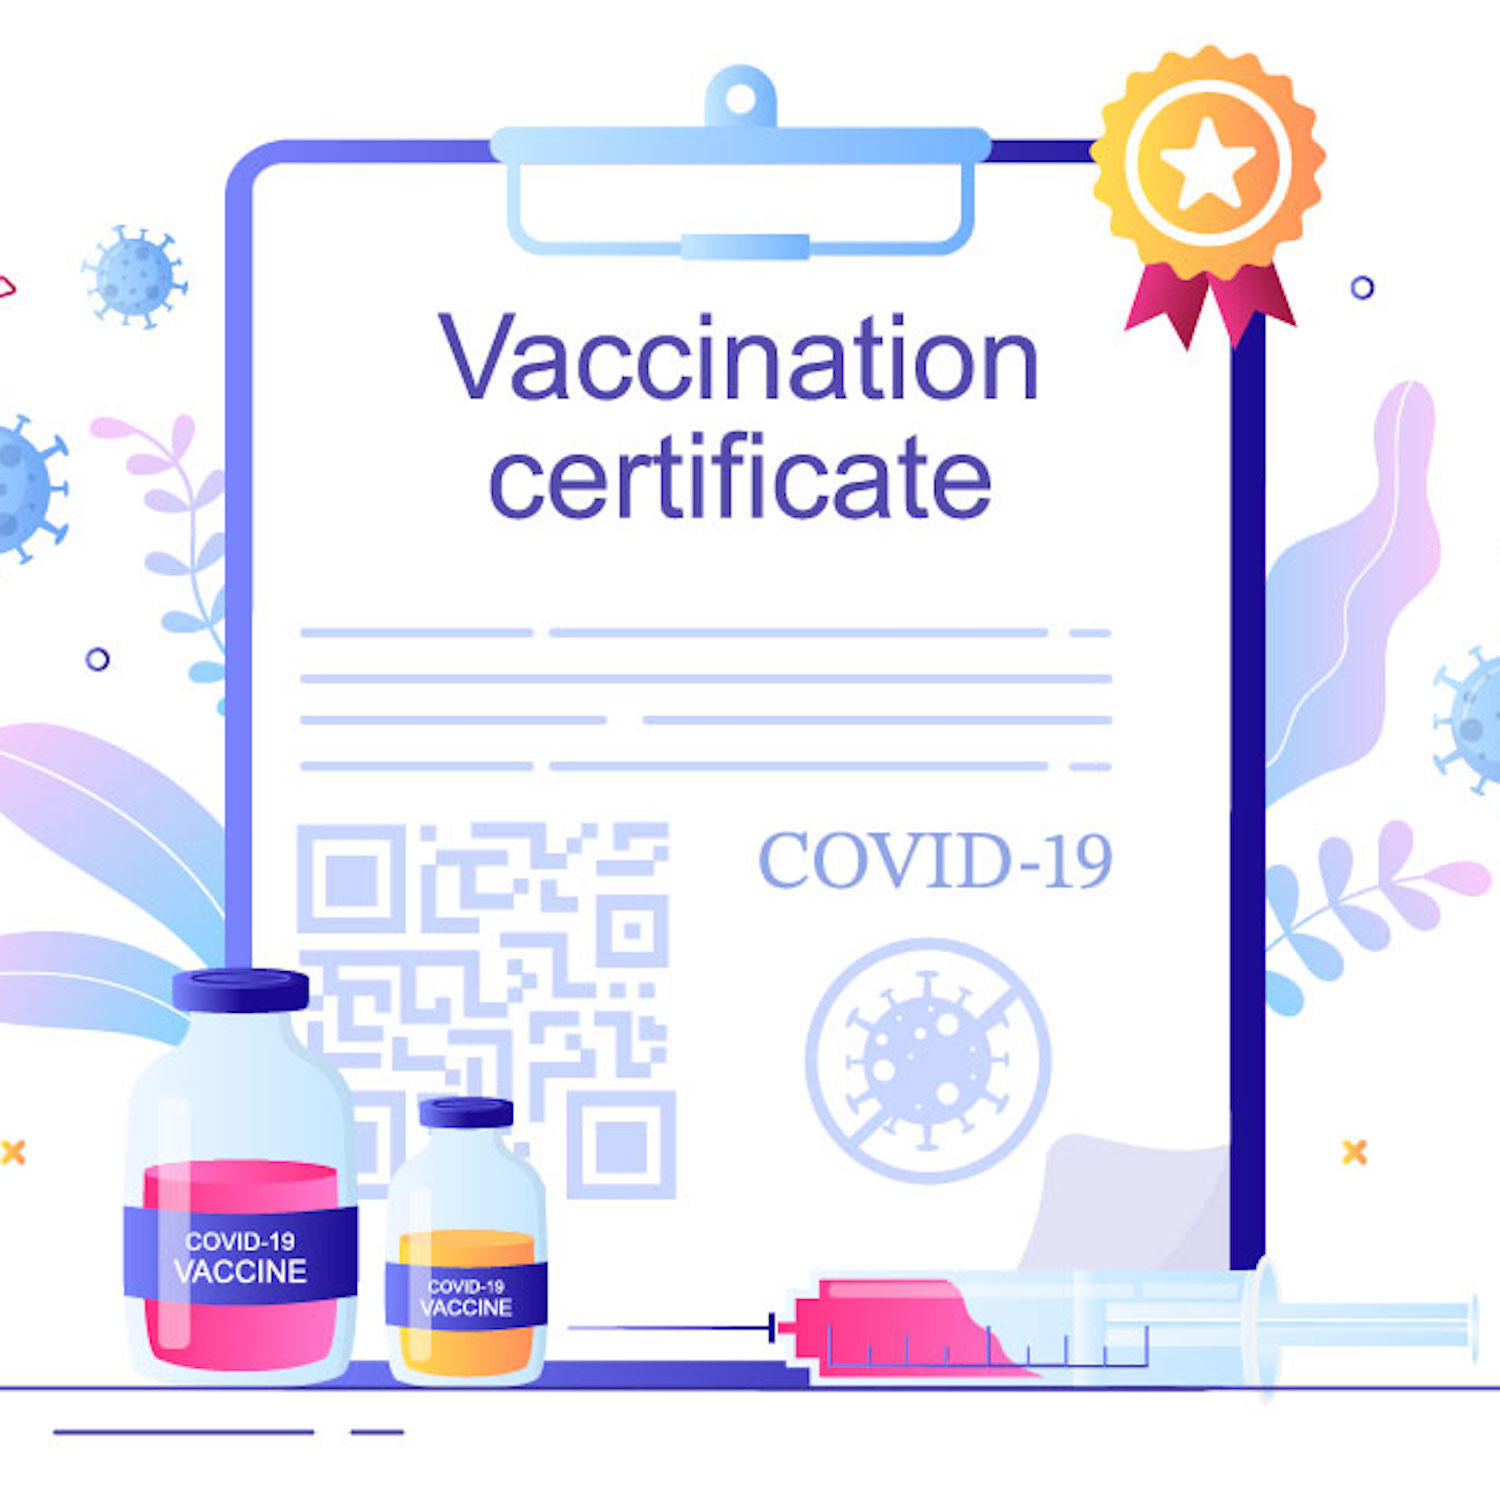 Covid-19 Vaccination Certificate Illustration cover image.